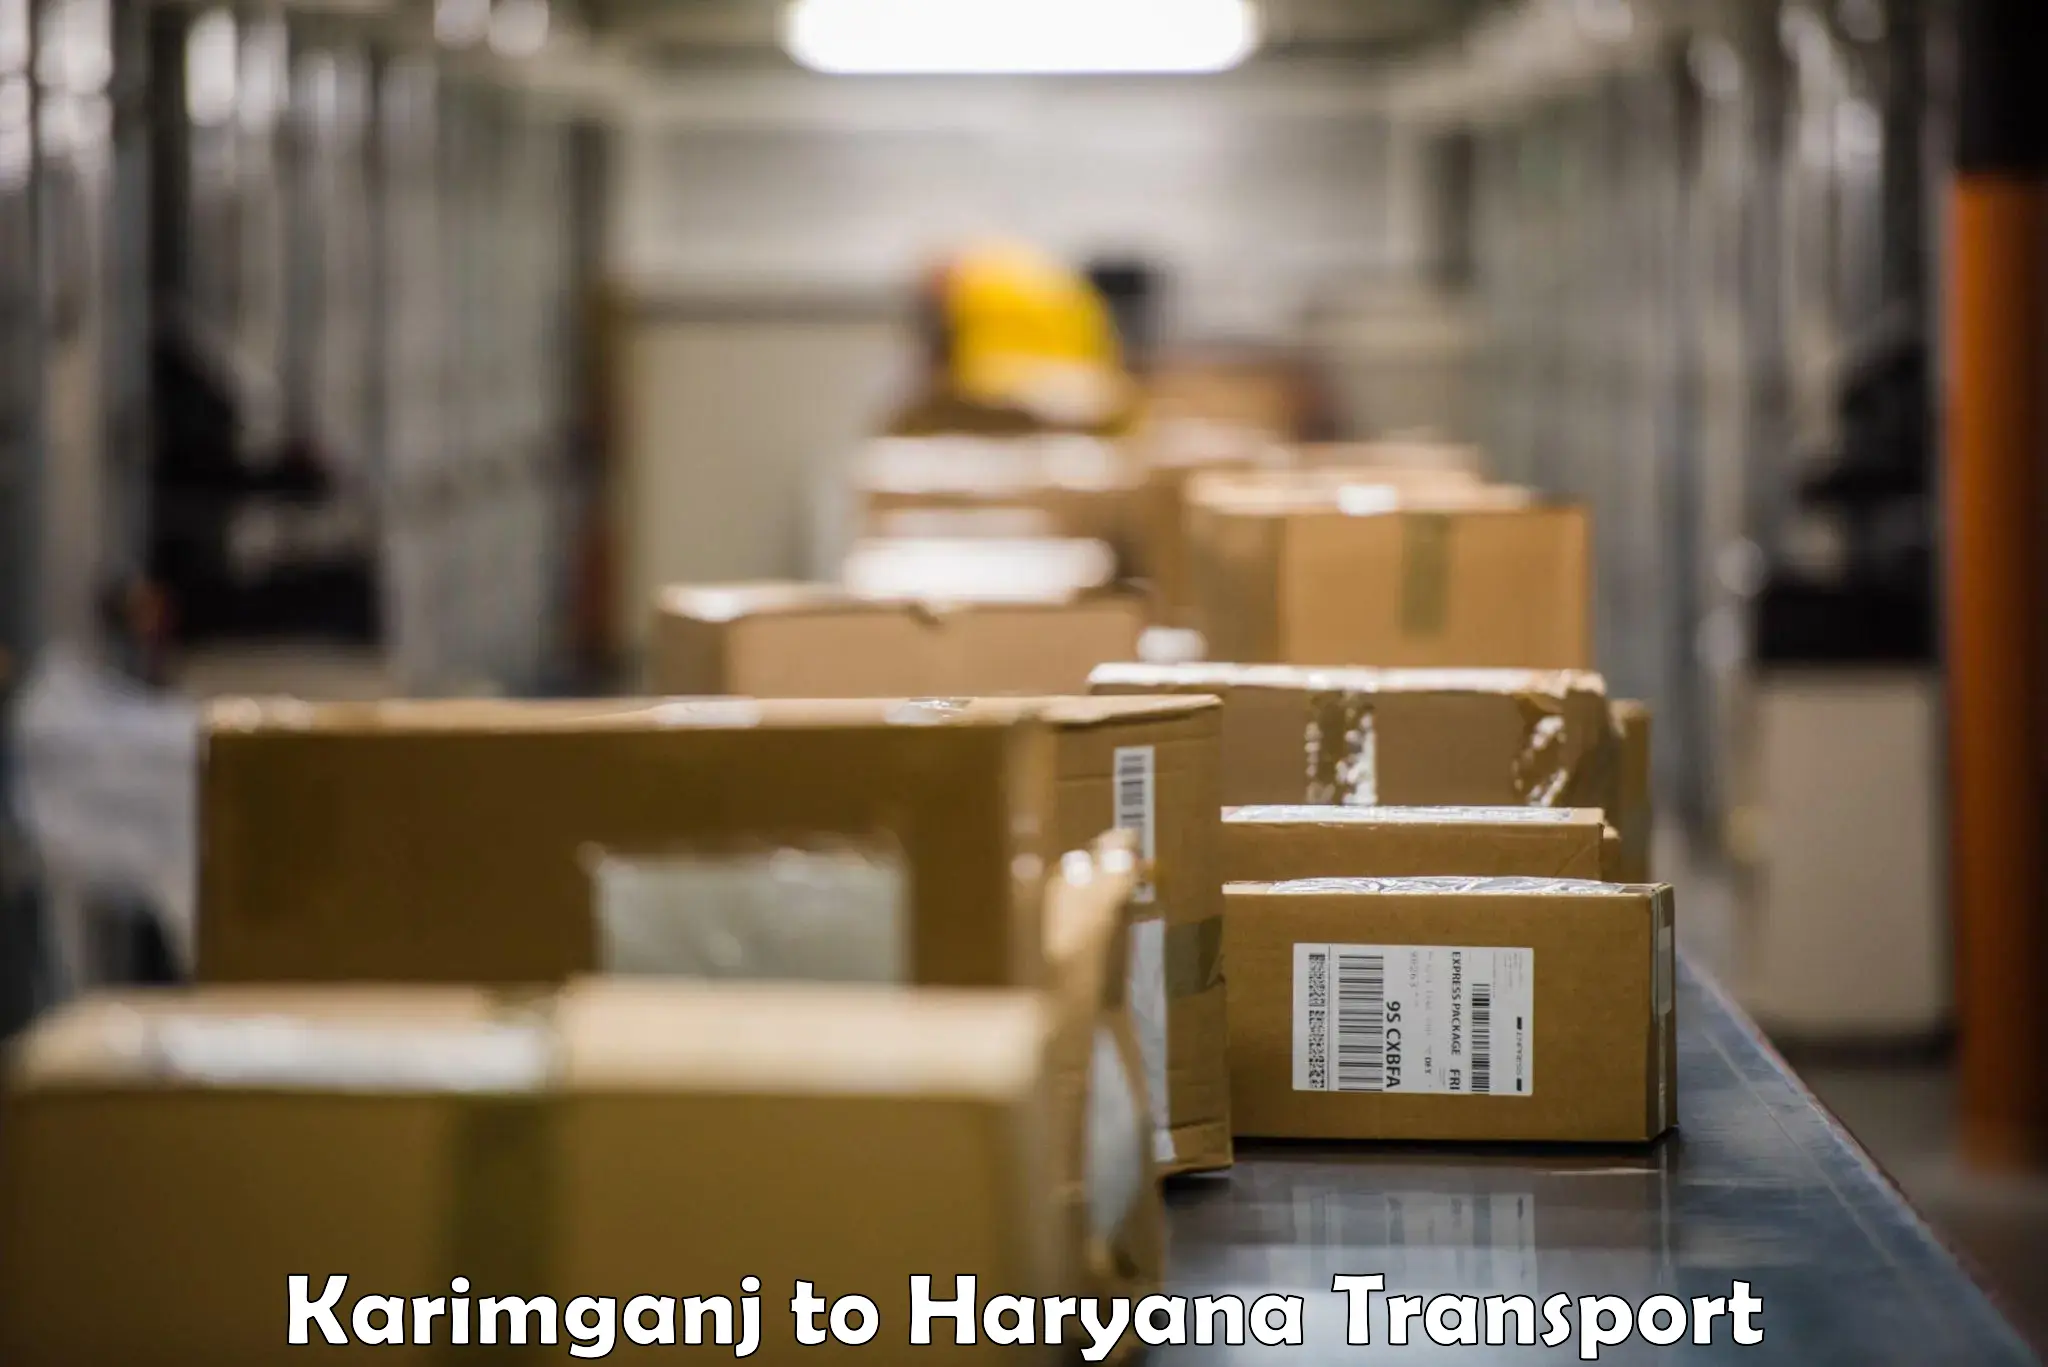 Truck transport companies in India Karimganj to Panchkula